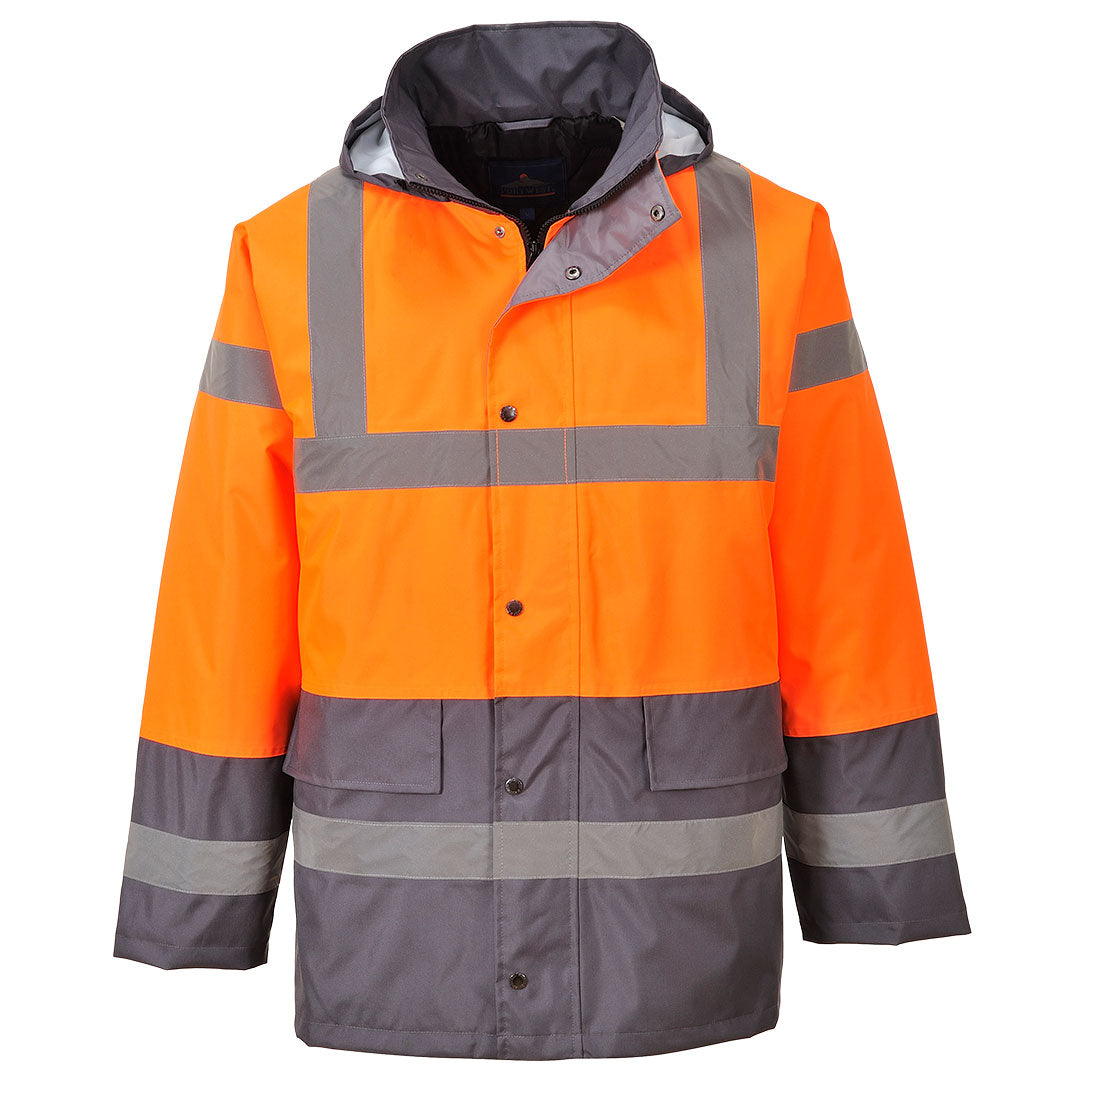 Portwest S467 Hi Vis Two Tone Traffic Jacket 1#colour_orange-grey 2#colour_orange-grey